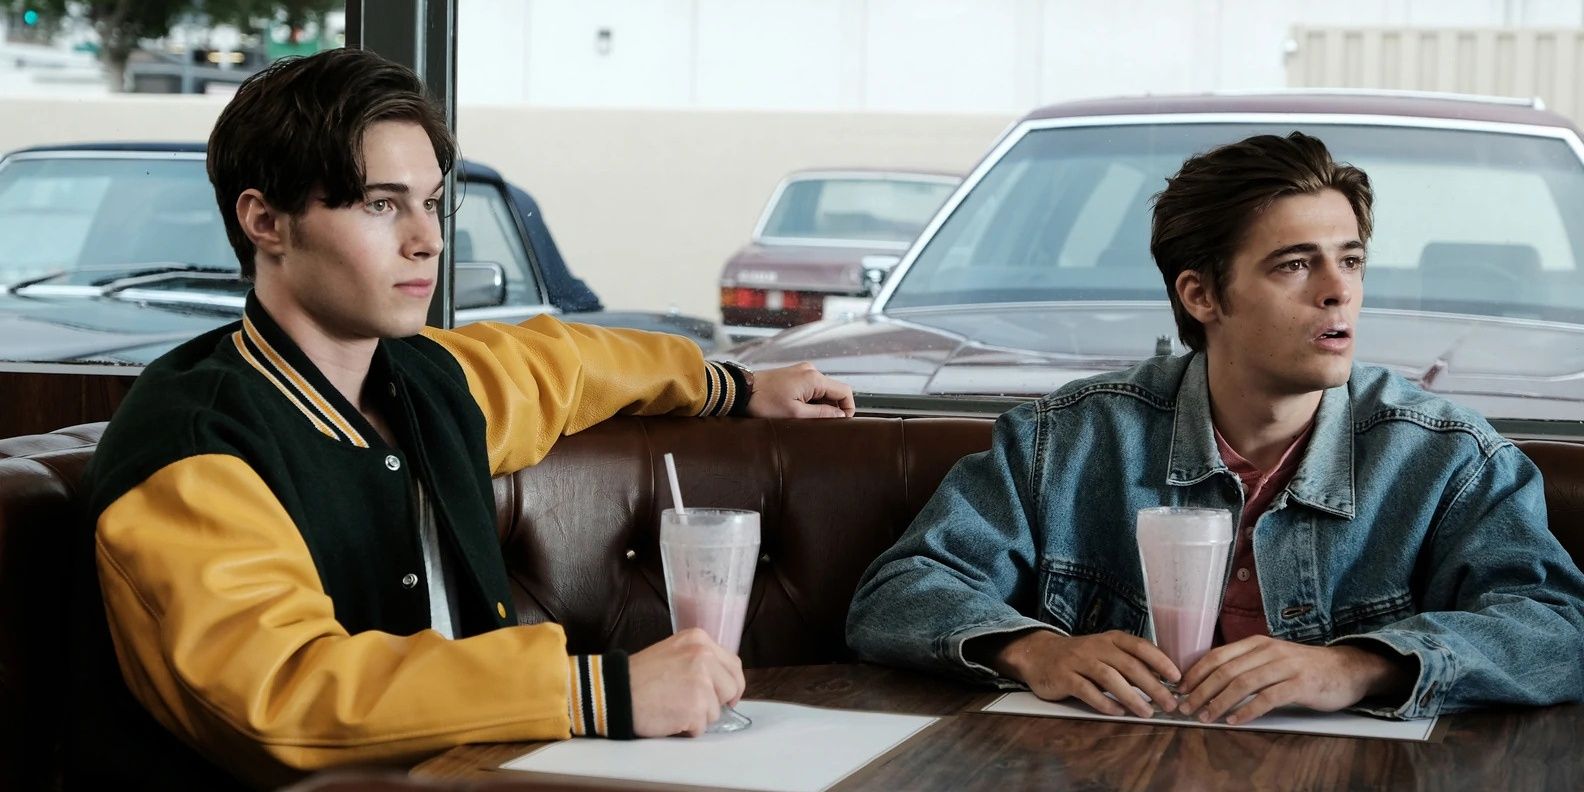 Cal and Derek at a milkshake diner after high school wrestling practice, in Euphoria Season 2's flashback